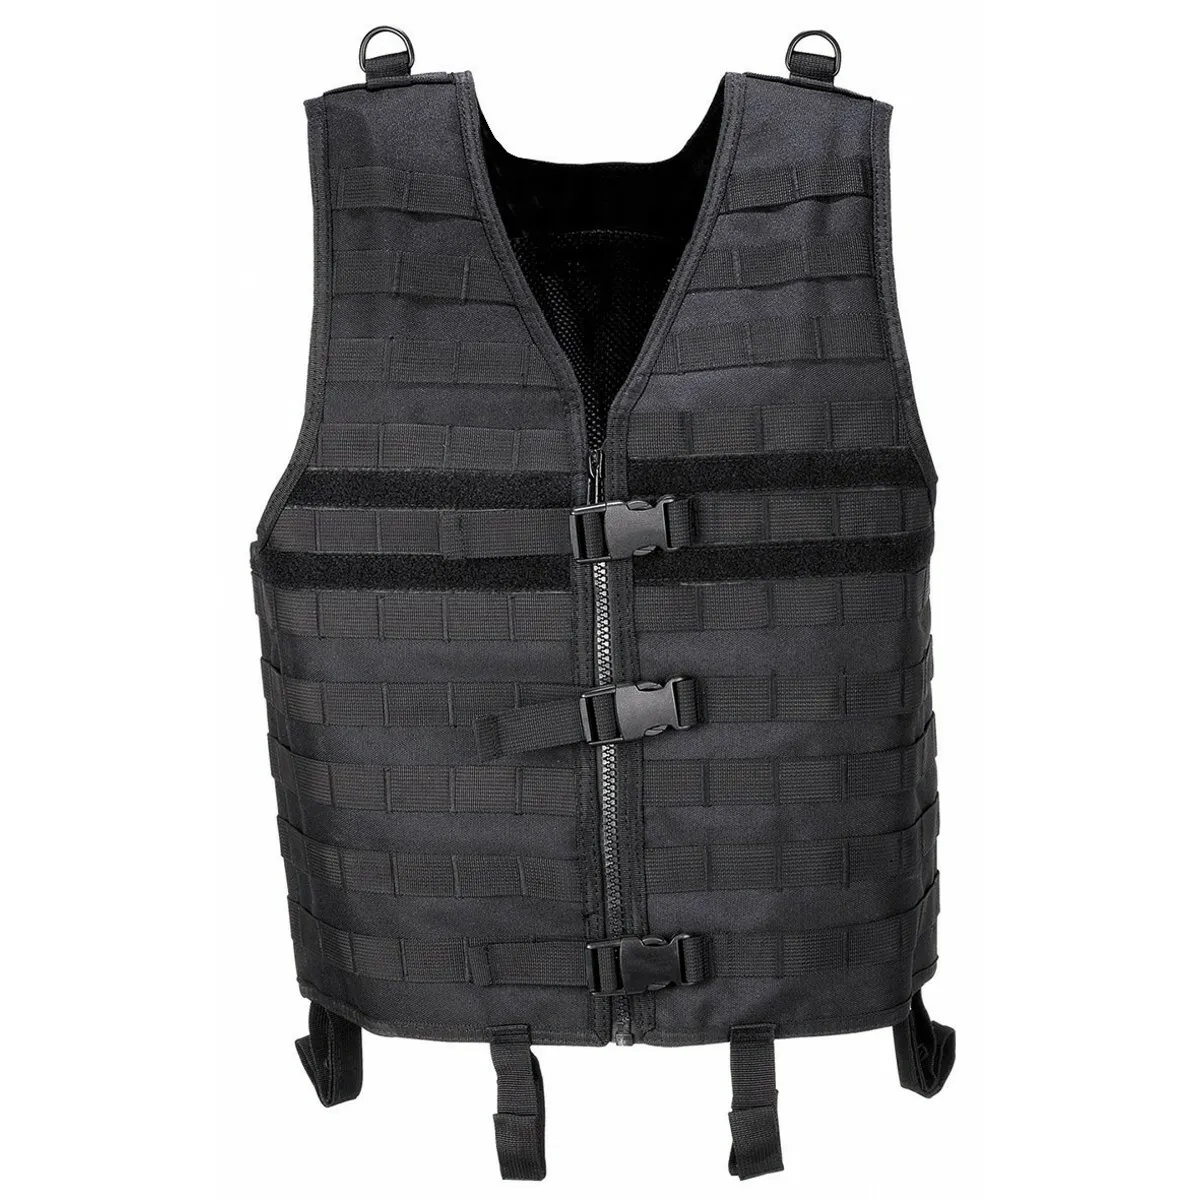 MFH Jacket Vest Tactical Military Man System Modular Light Black